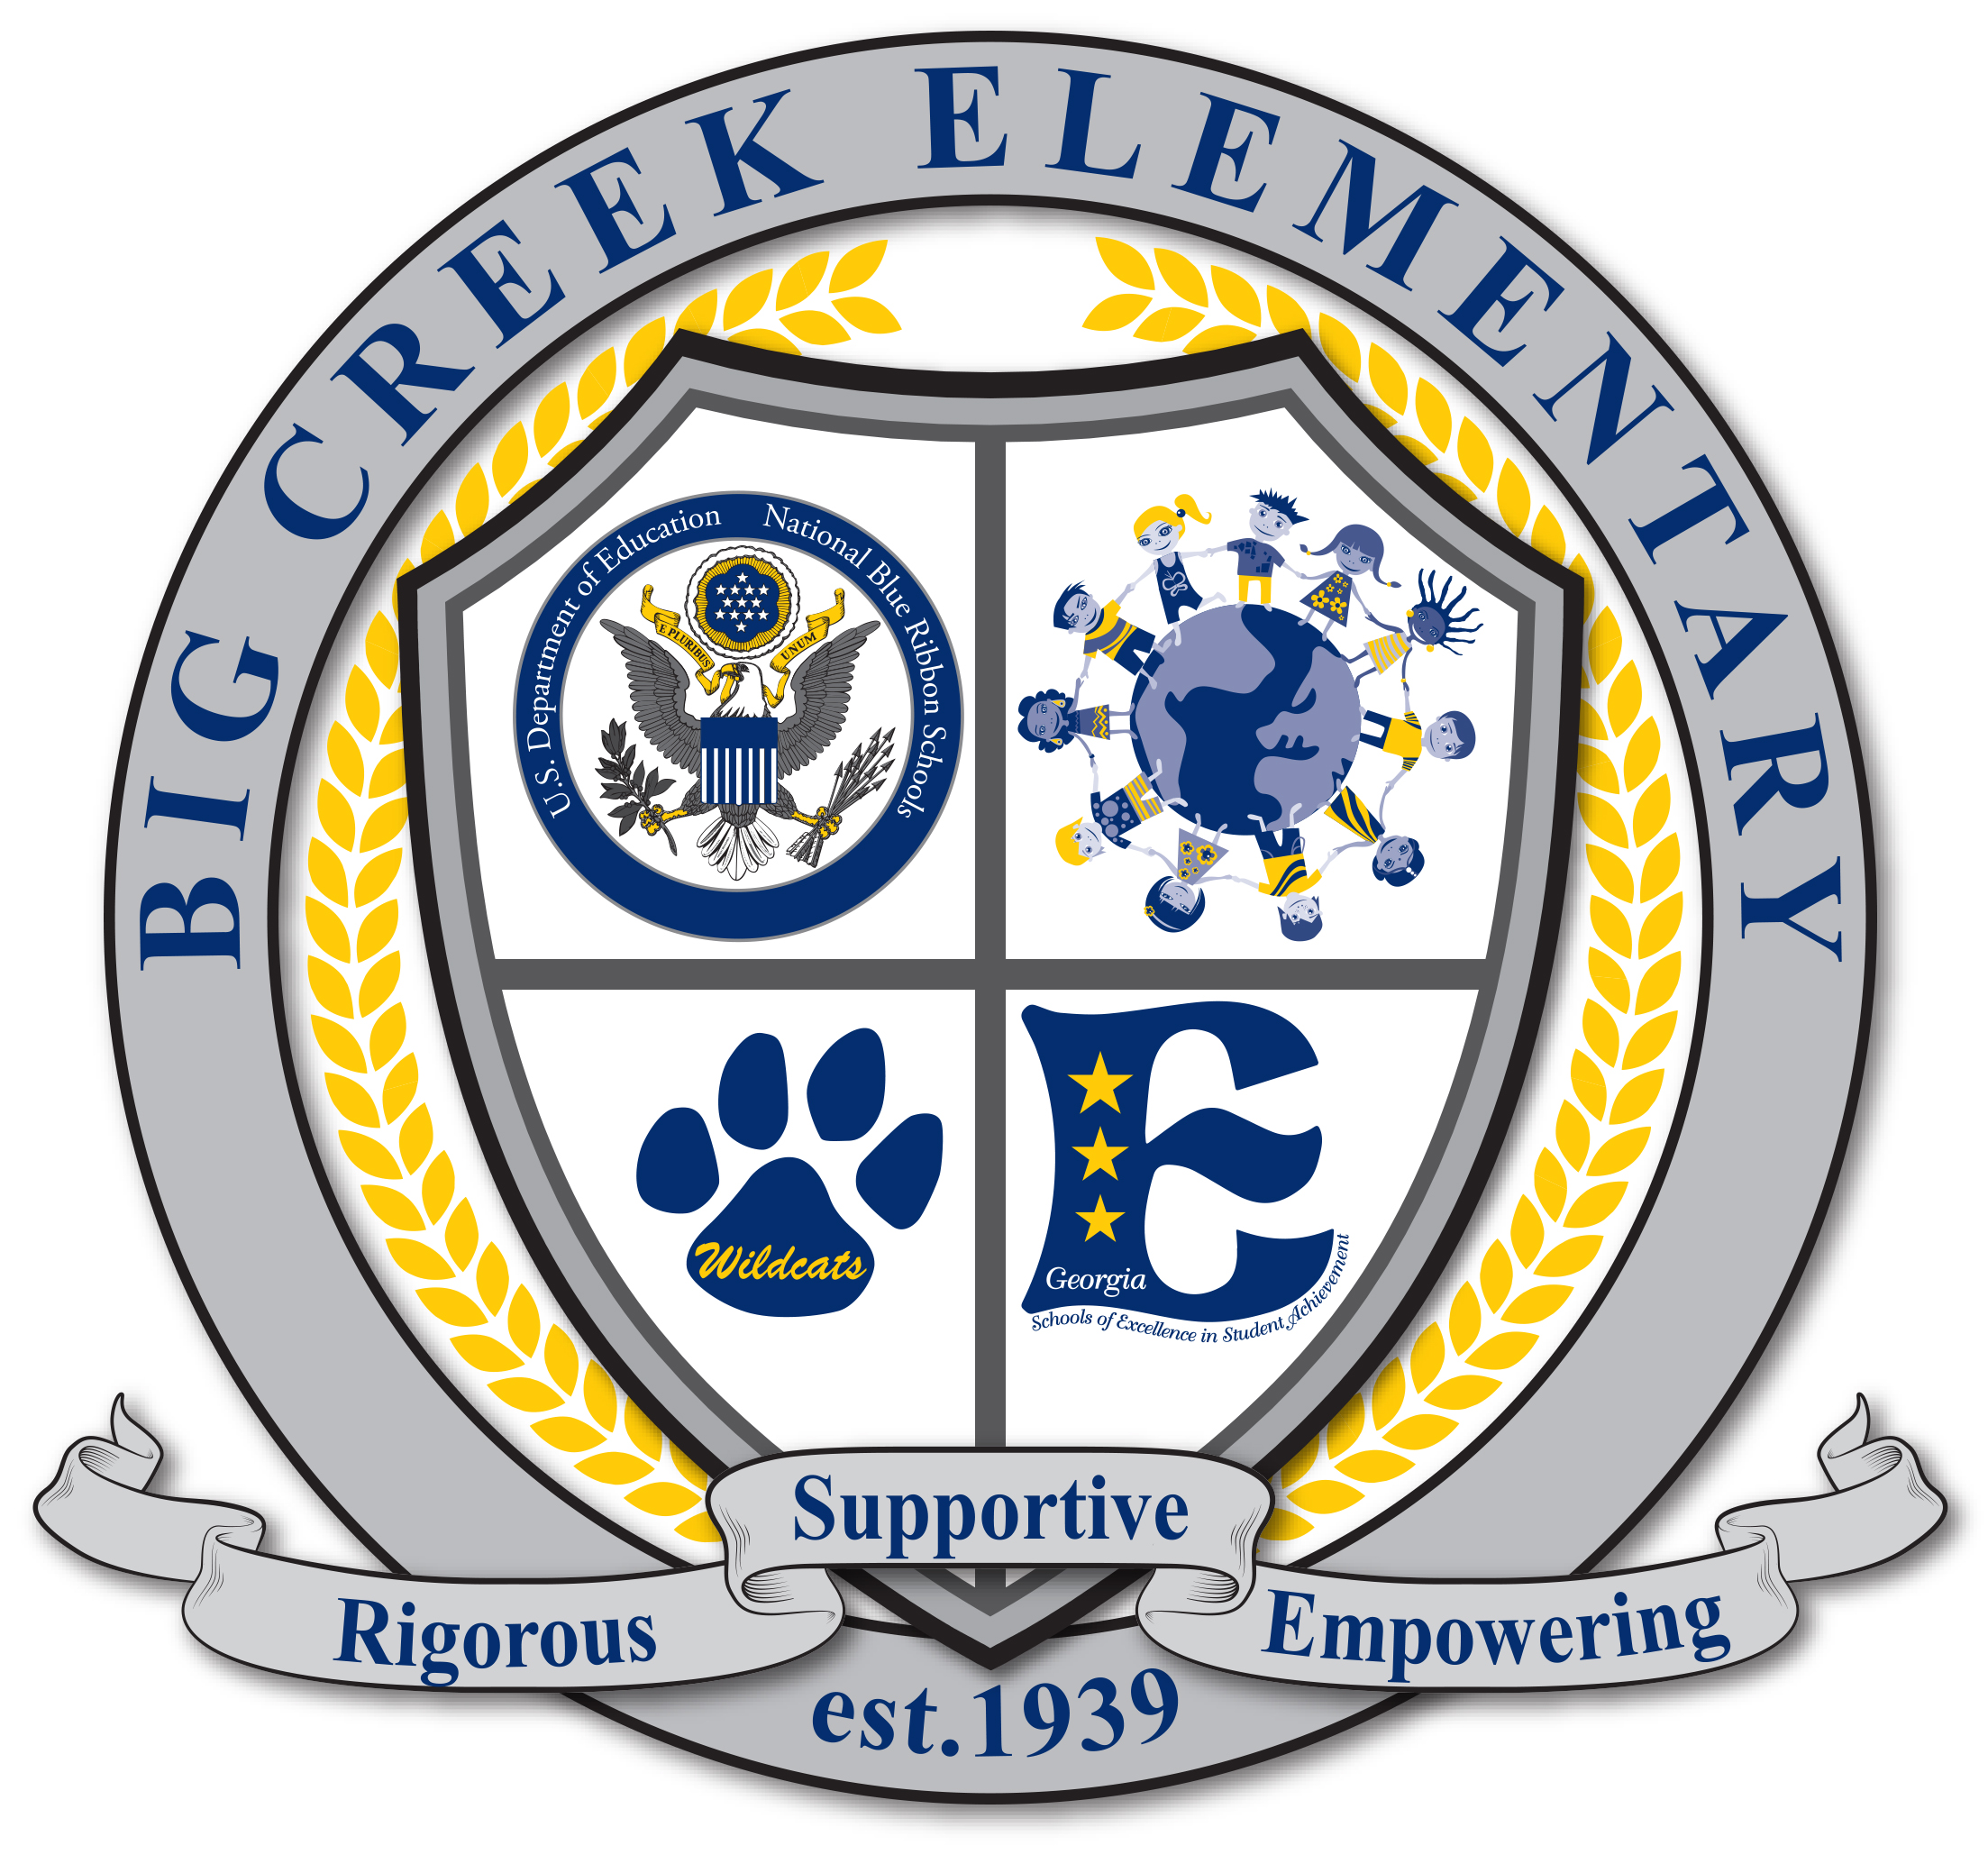 Big Creek Elementary School